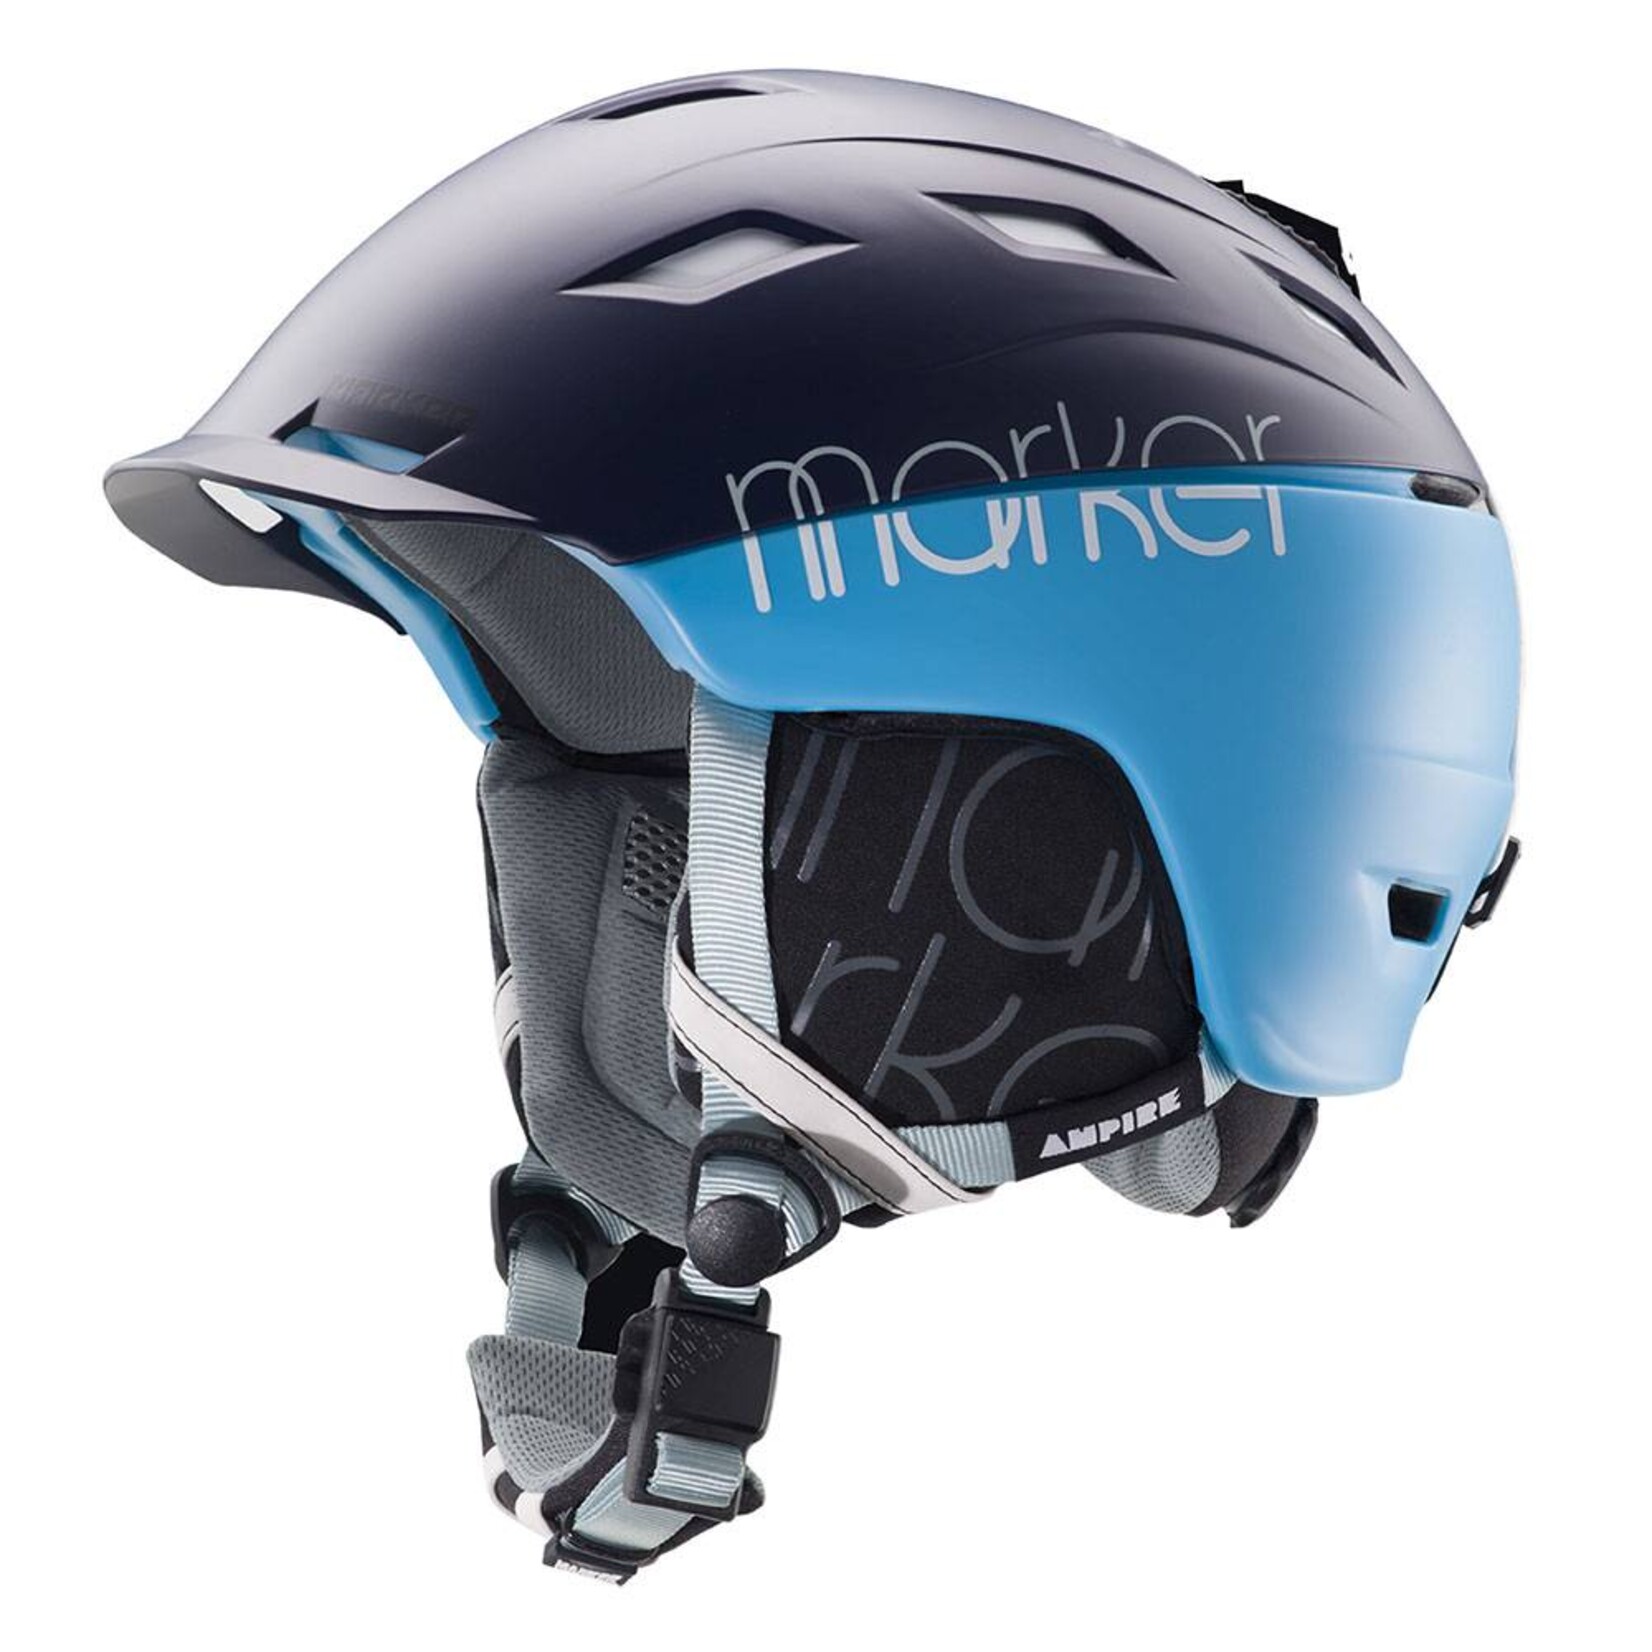 MARKER Marker Ampire Helmet Women's